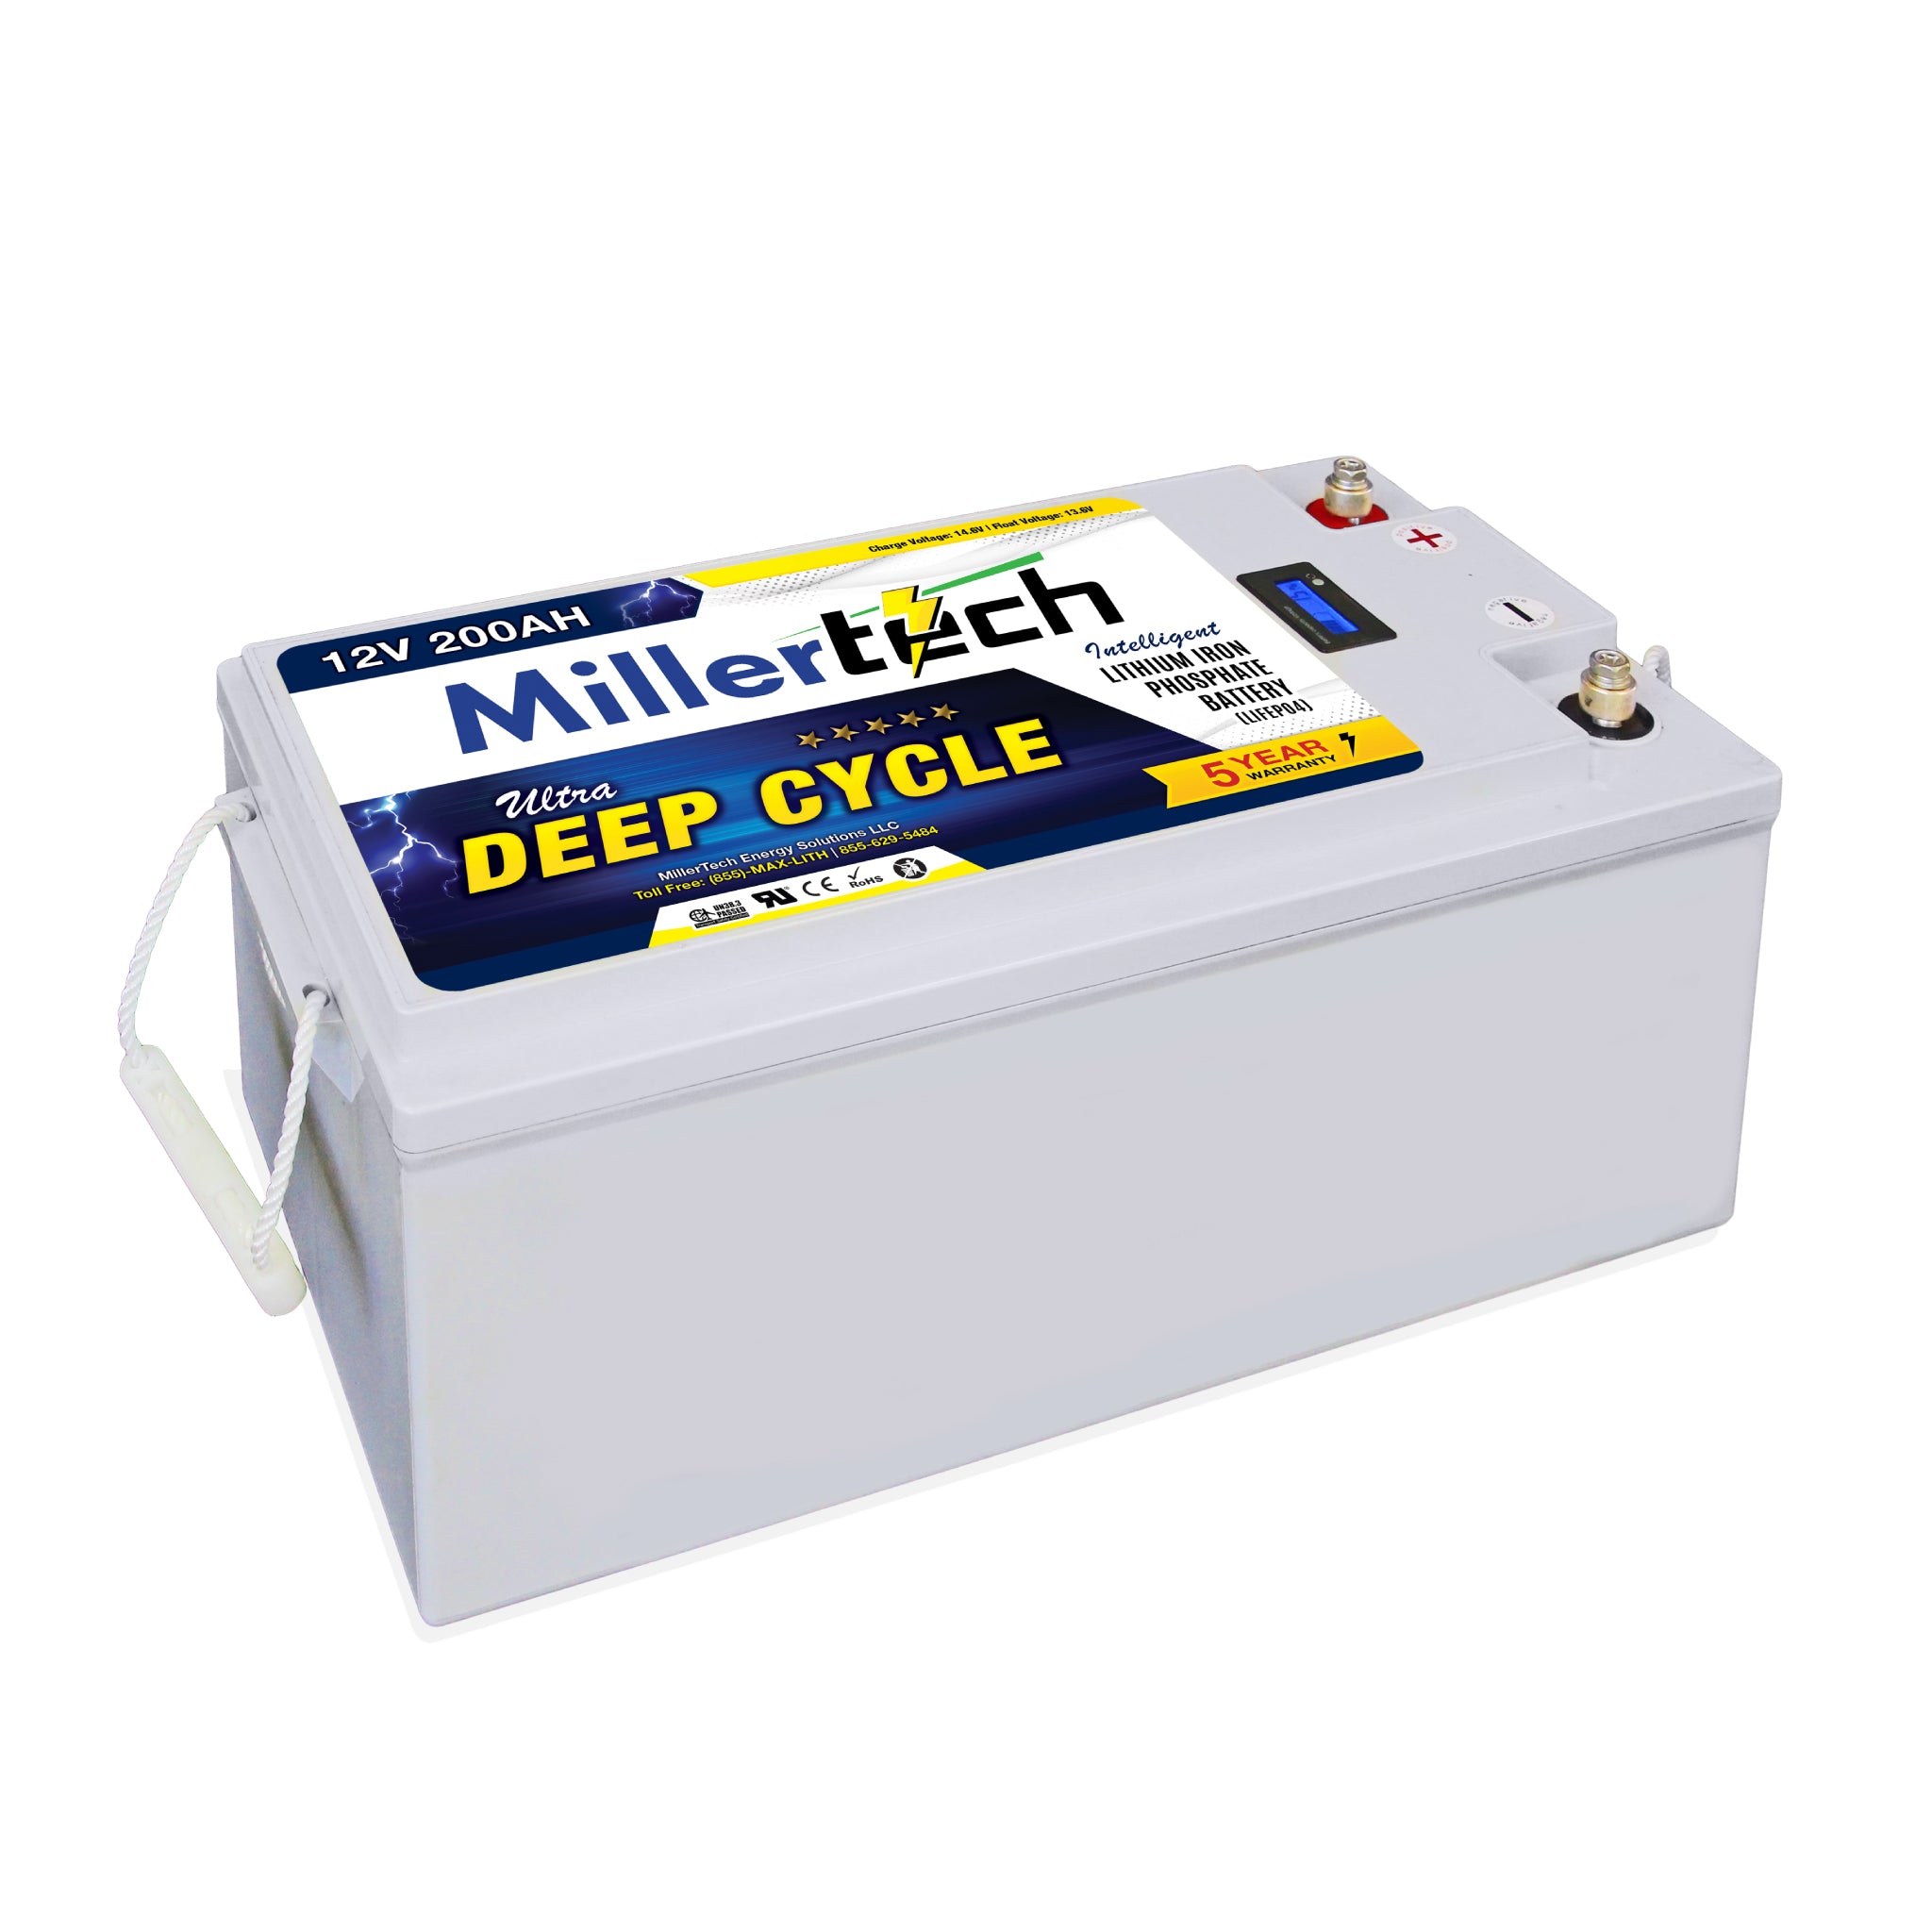 MillerTech 100Ah 12V SPRINTR Lithium Iron Phosphate (LiFePO4) Battery –  LDSreliance